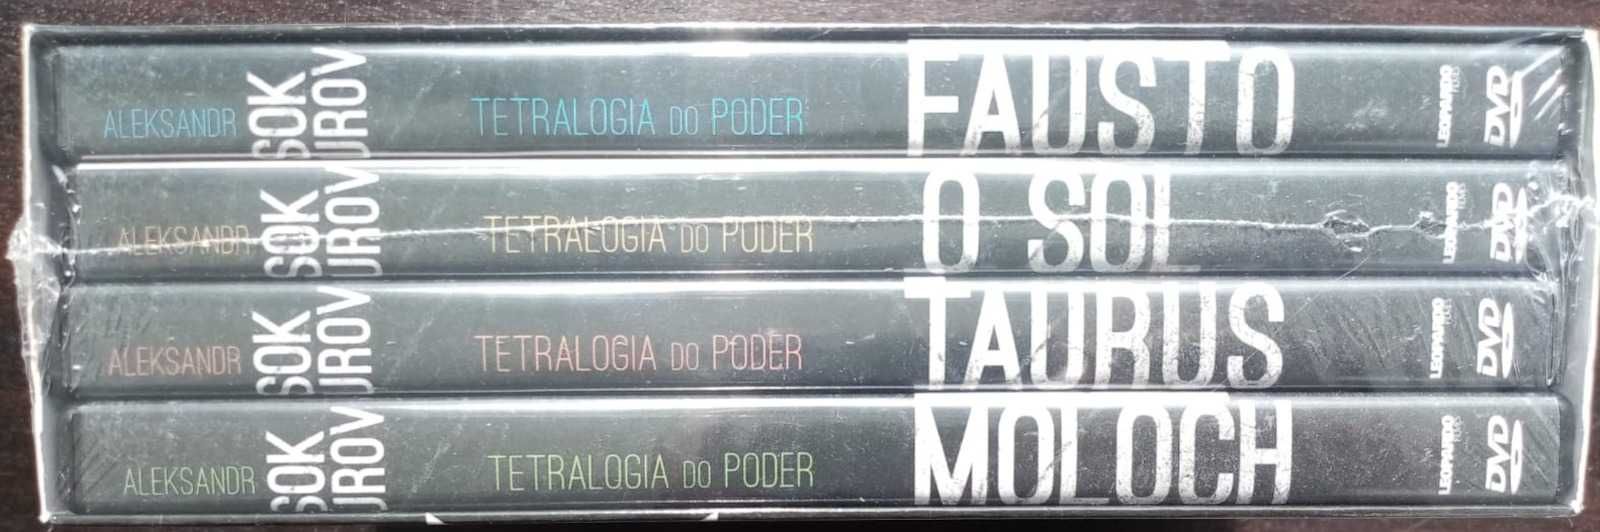 dvd: caixa Aleksandr Sokurov "Moloch", "Taurus", "O sol" e "Fausto"